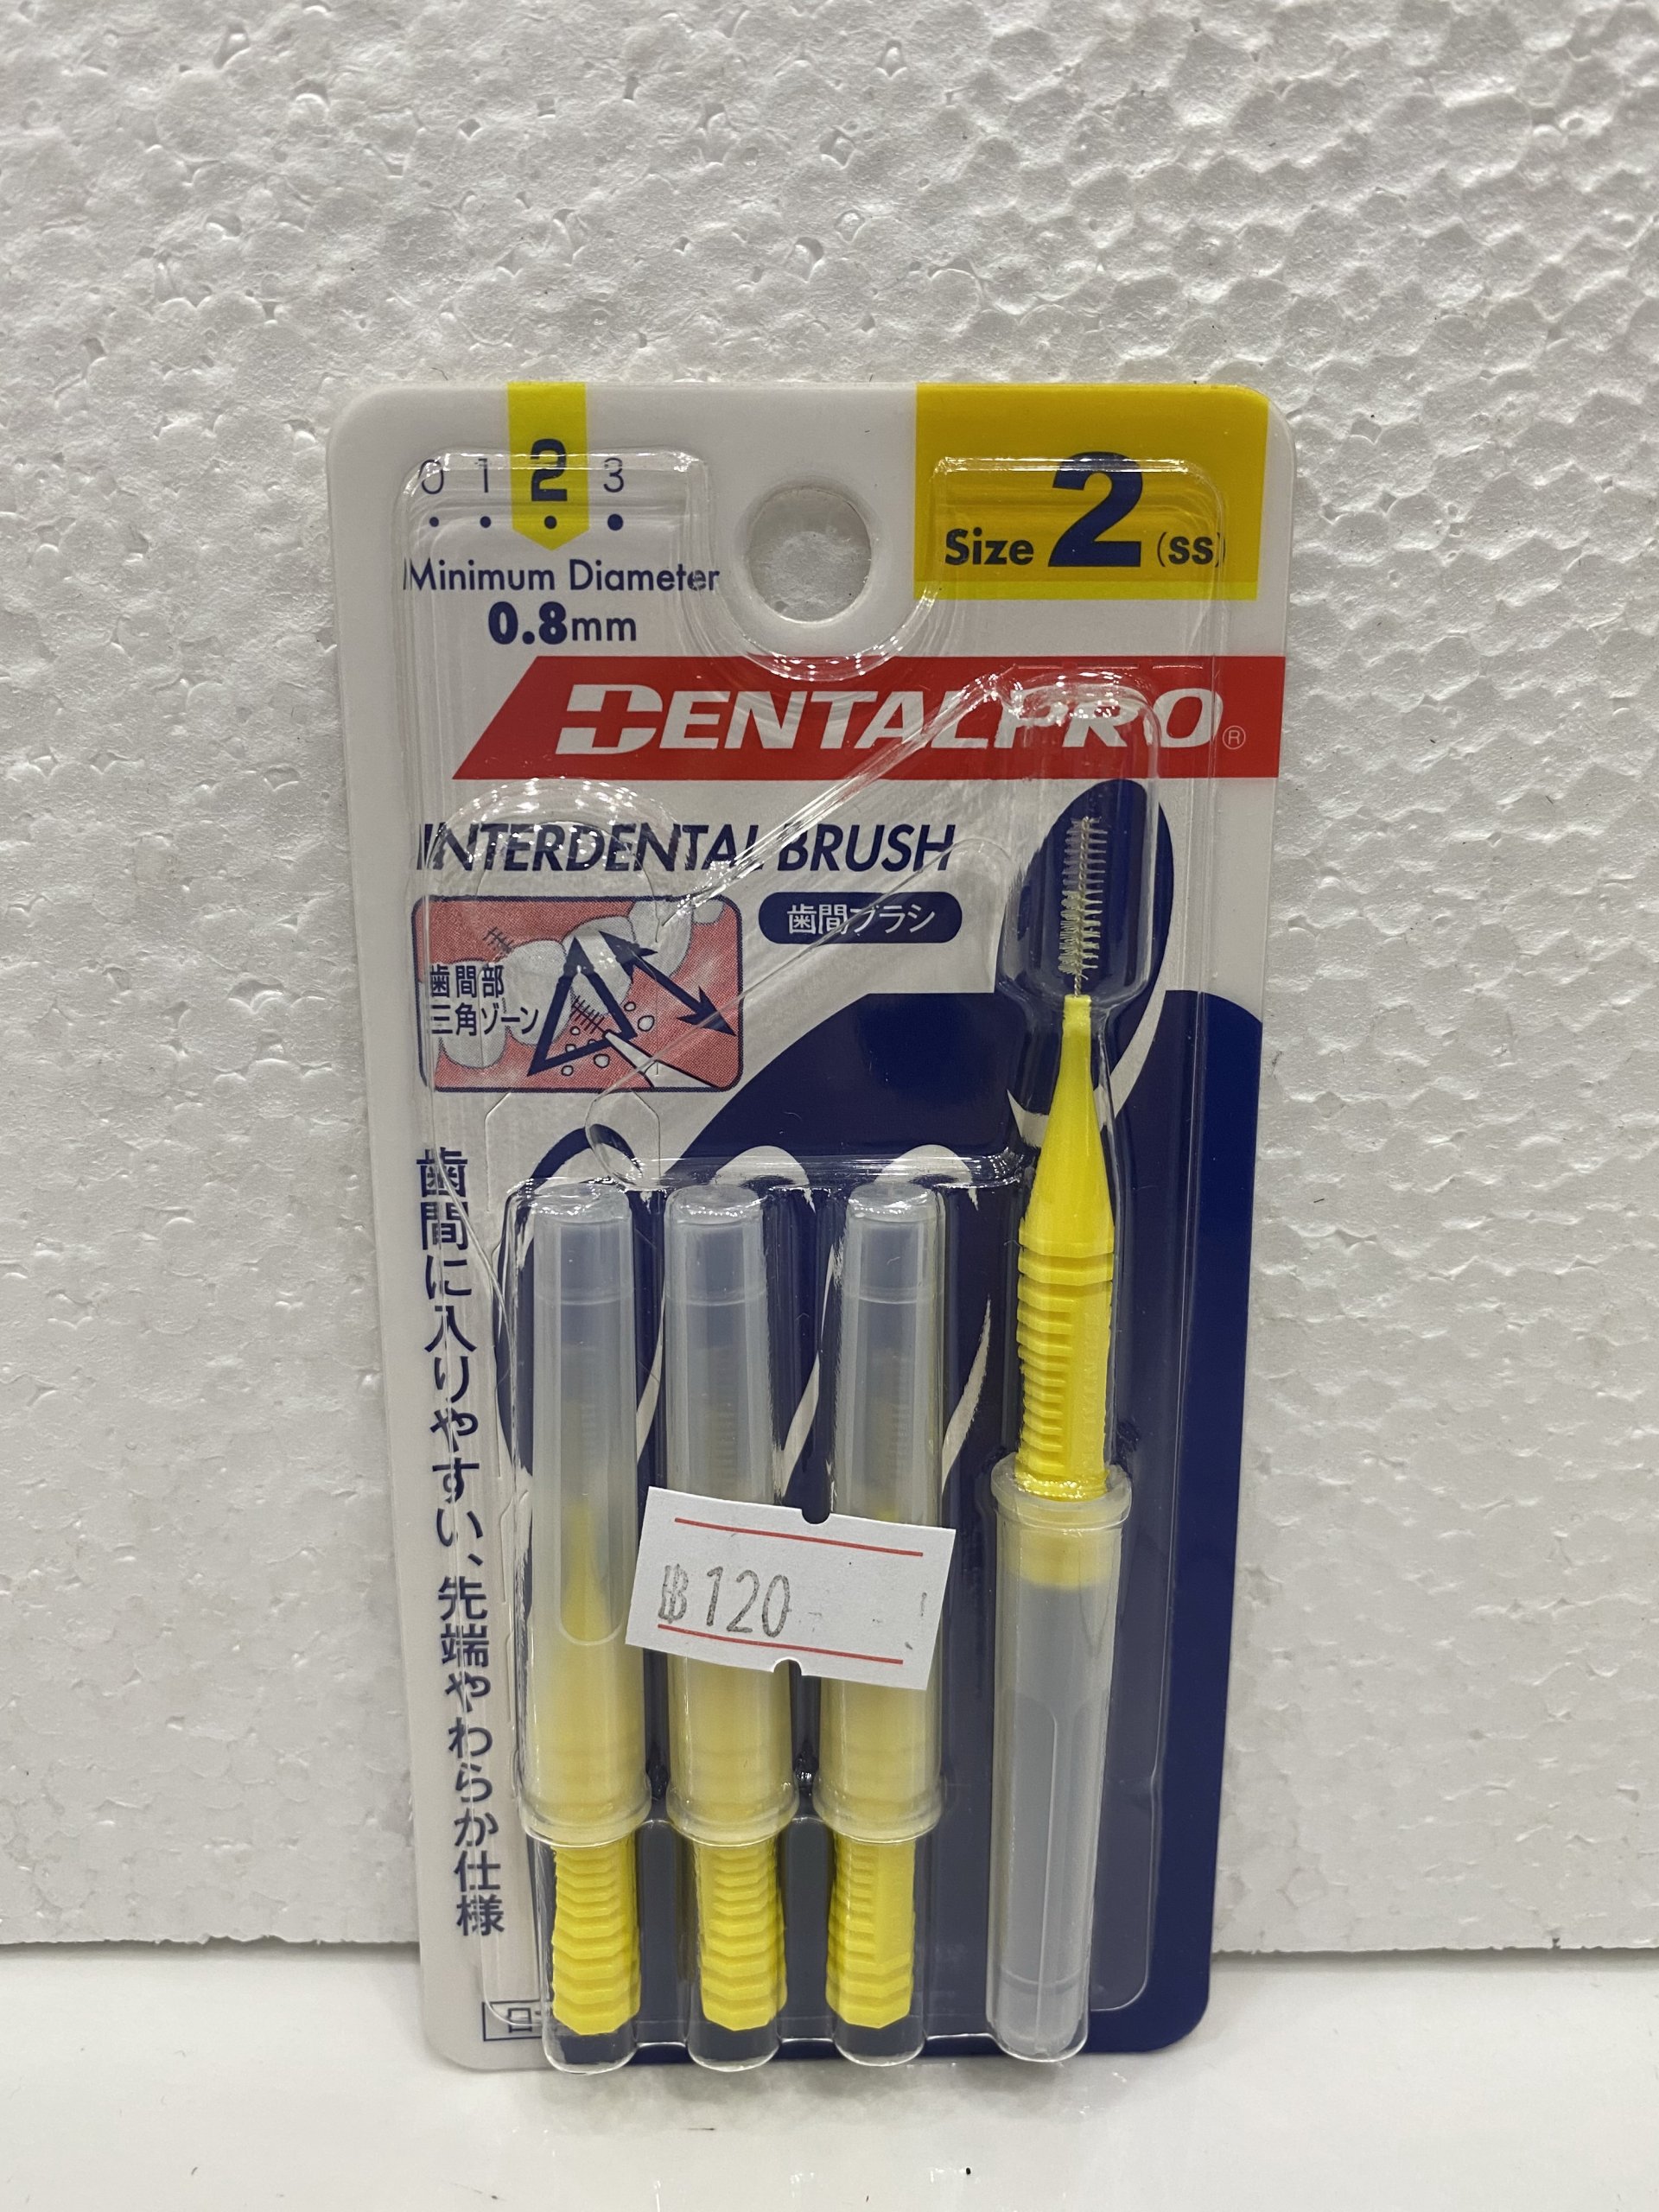 Dentalpro Interdental brush I-shape 0.8 mm size 2 (4 ชิ้น)